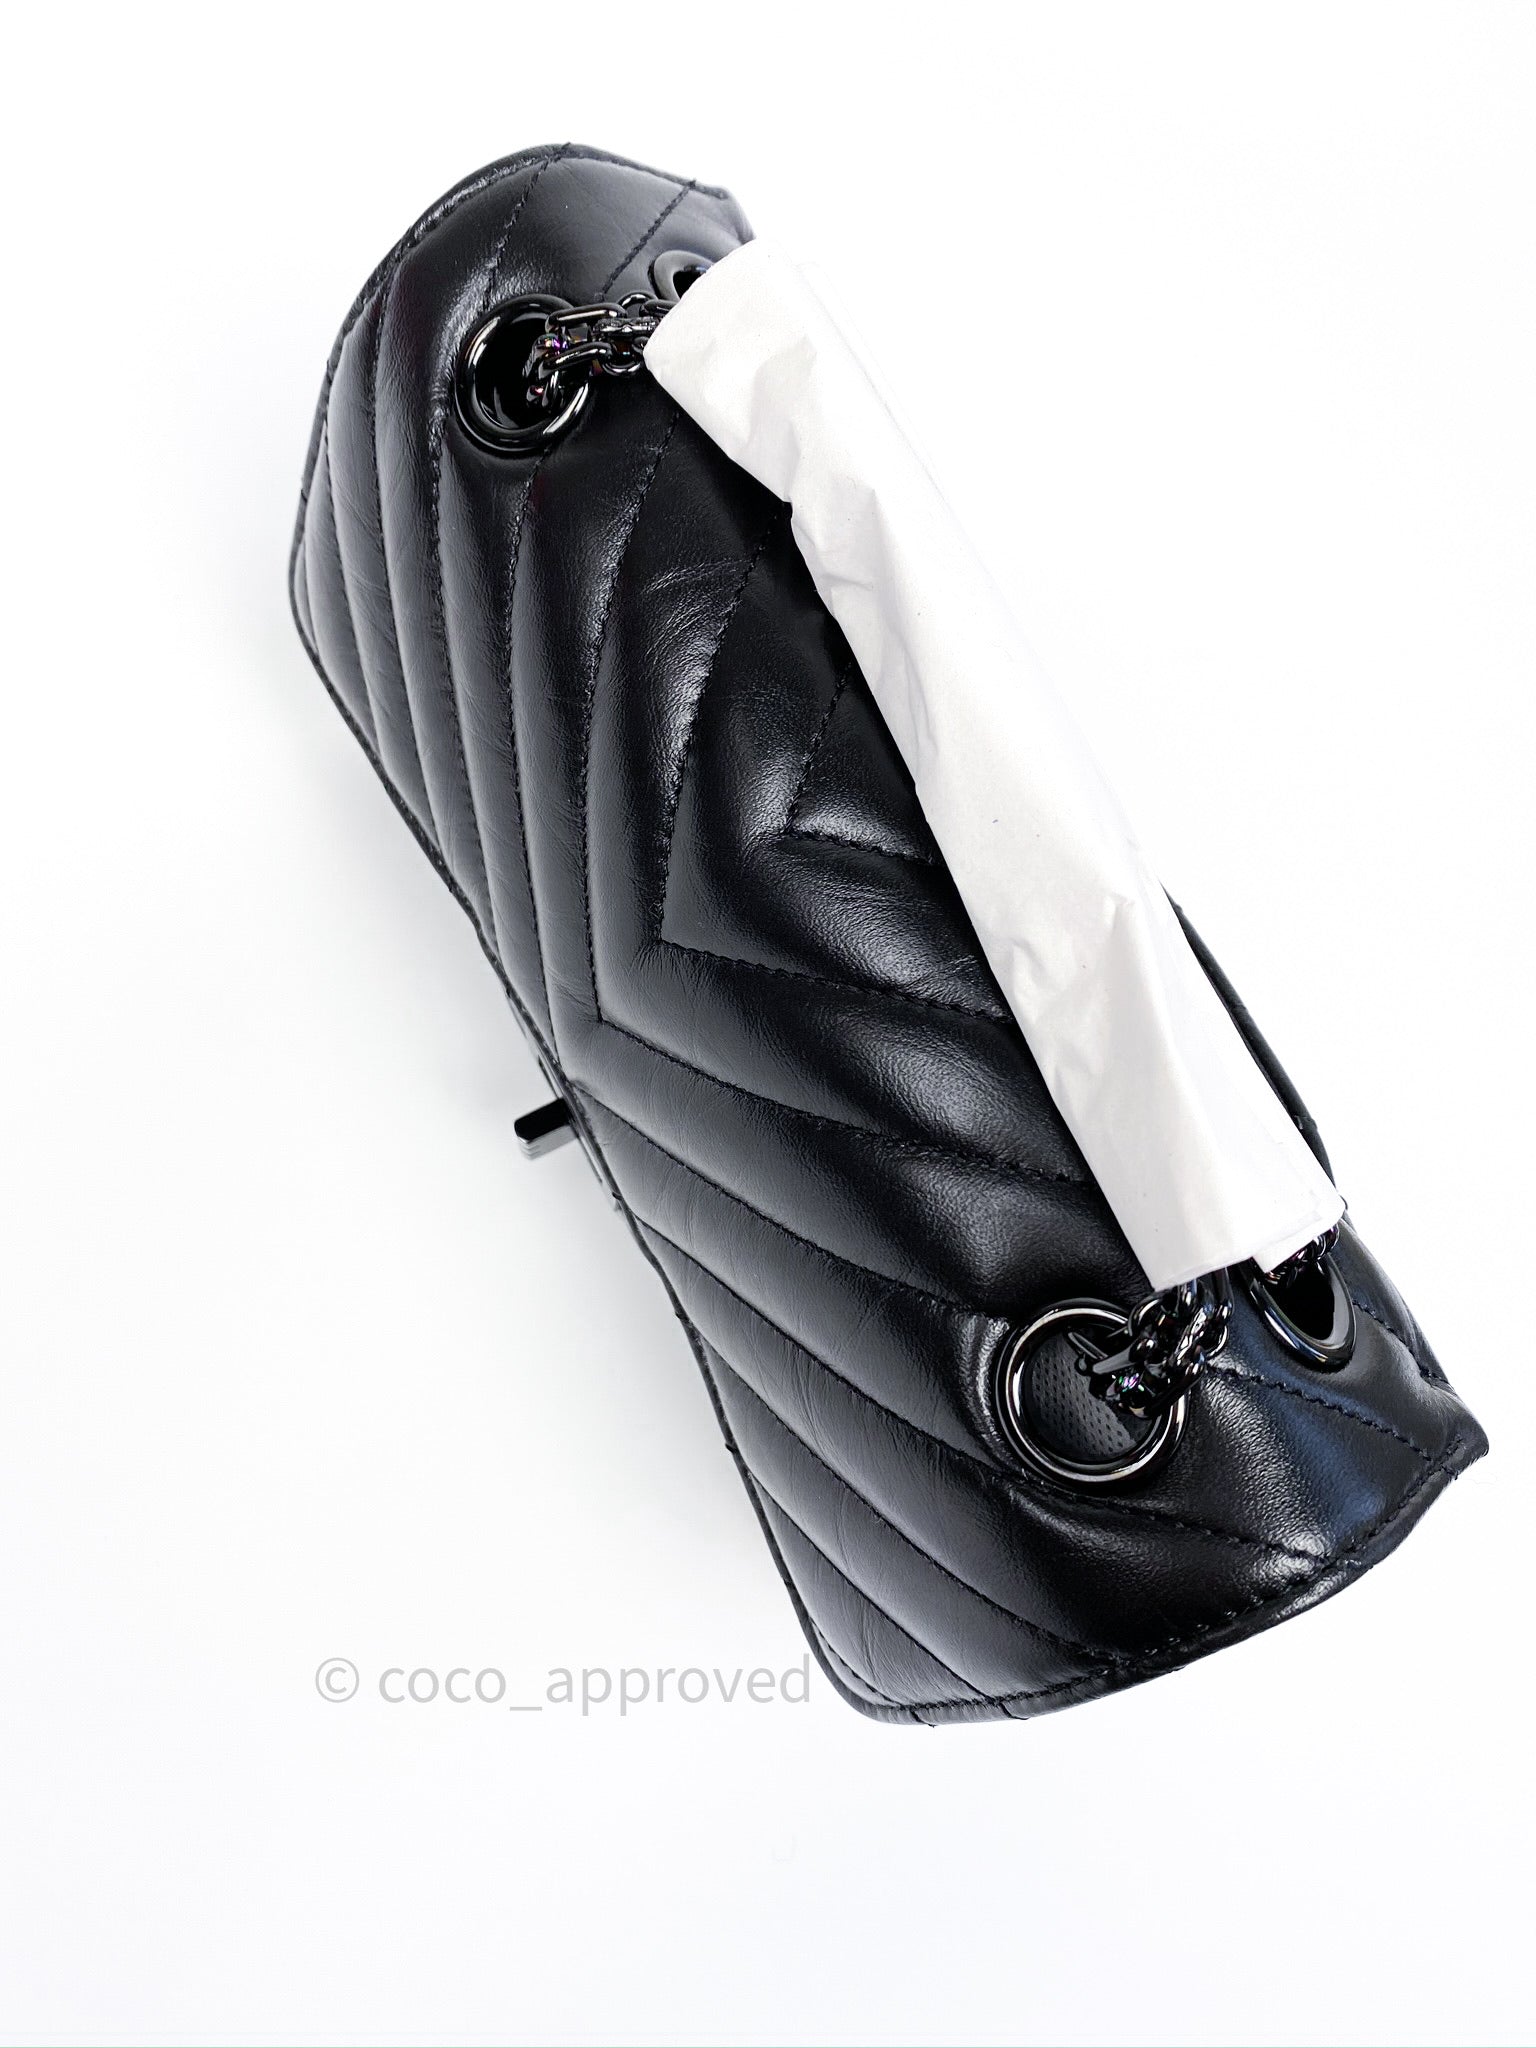 Chanel Mini So Black SS17 - Designer WishBags